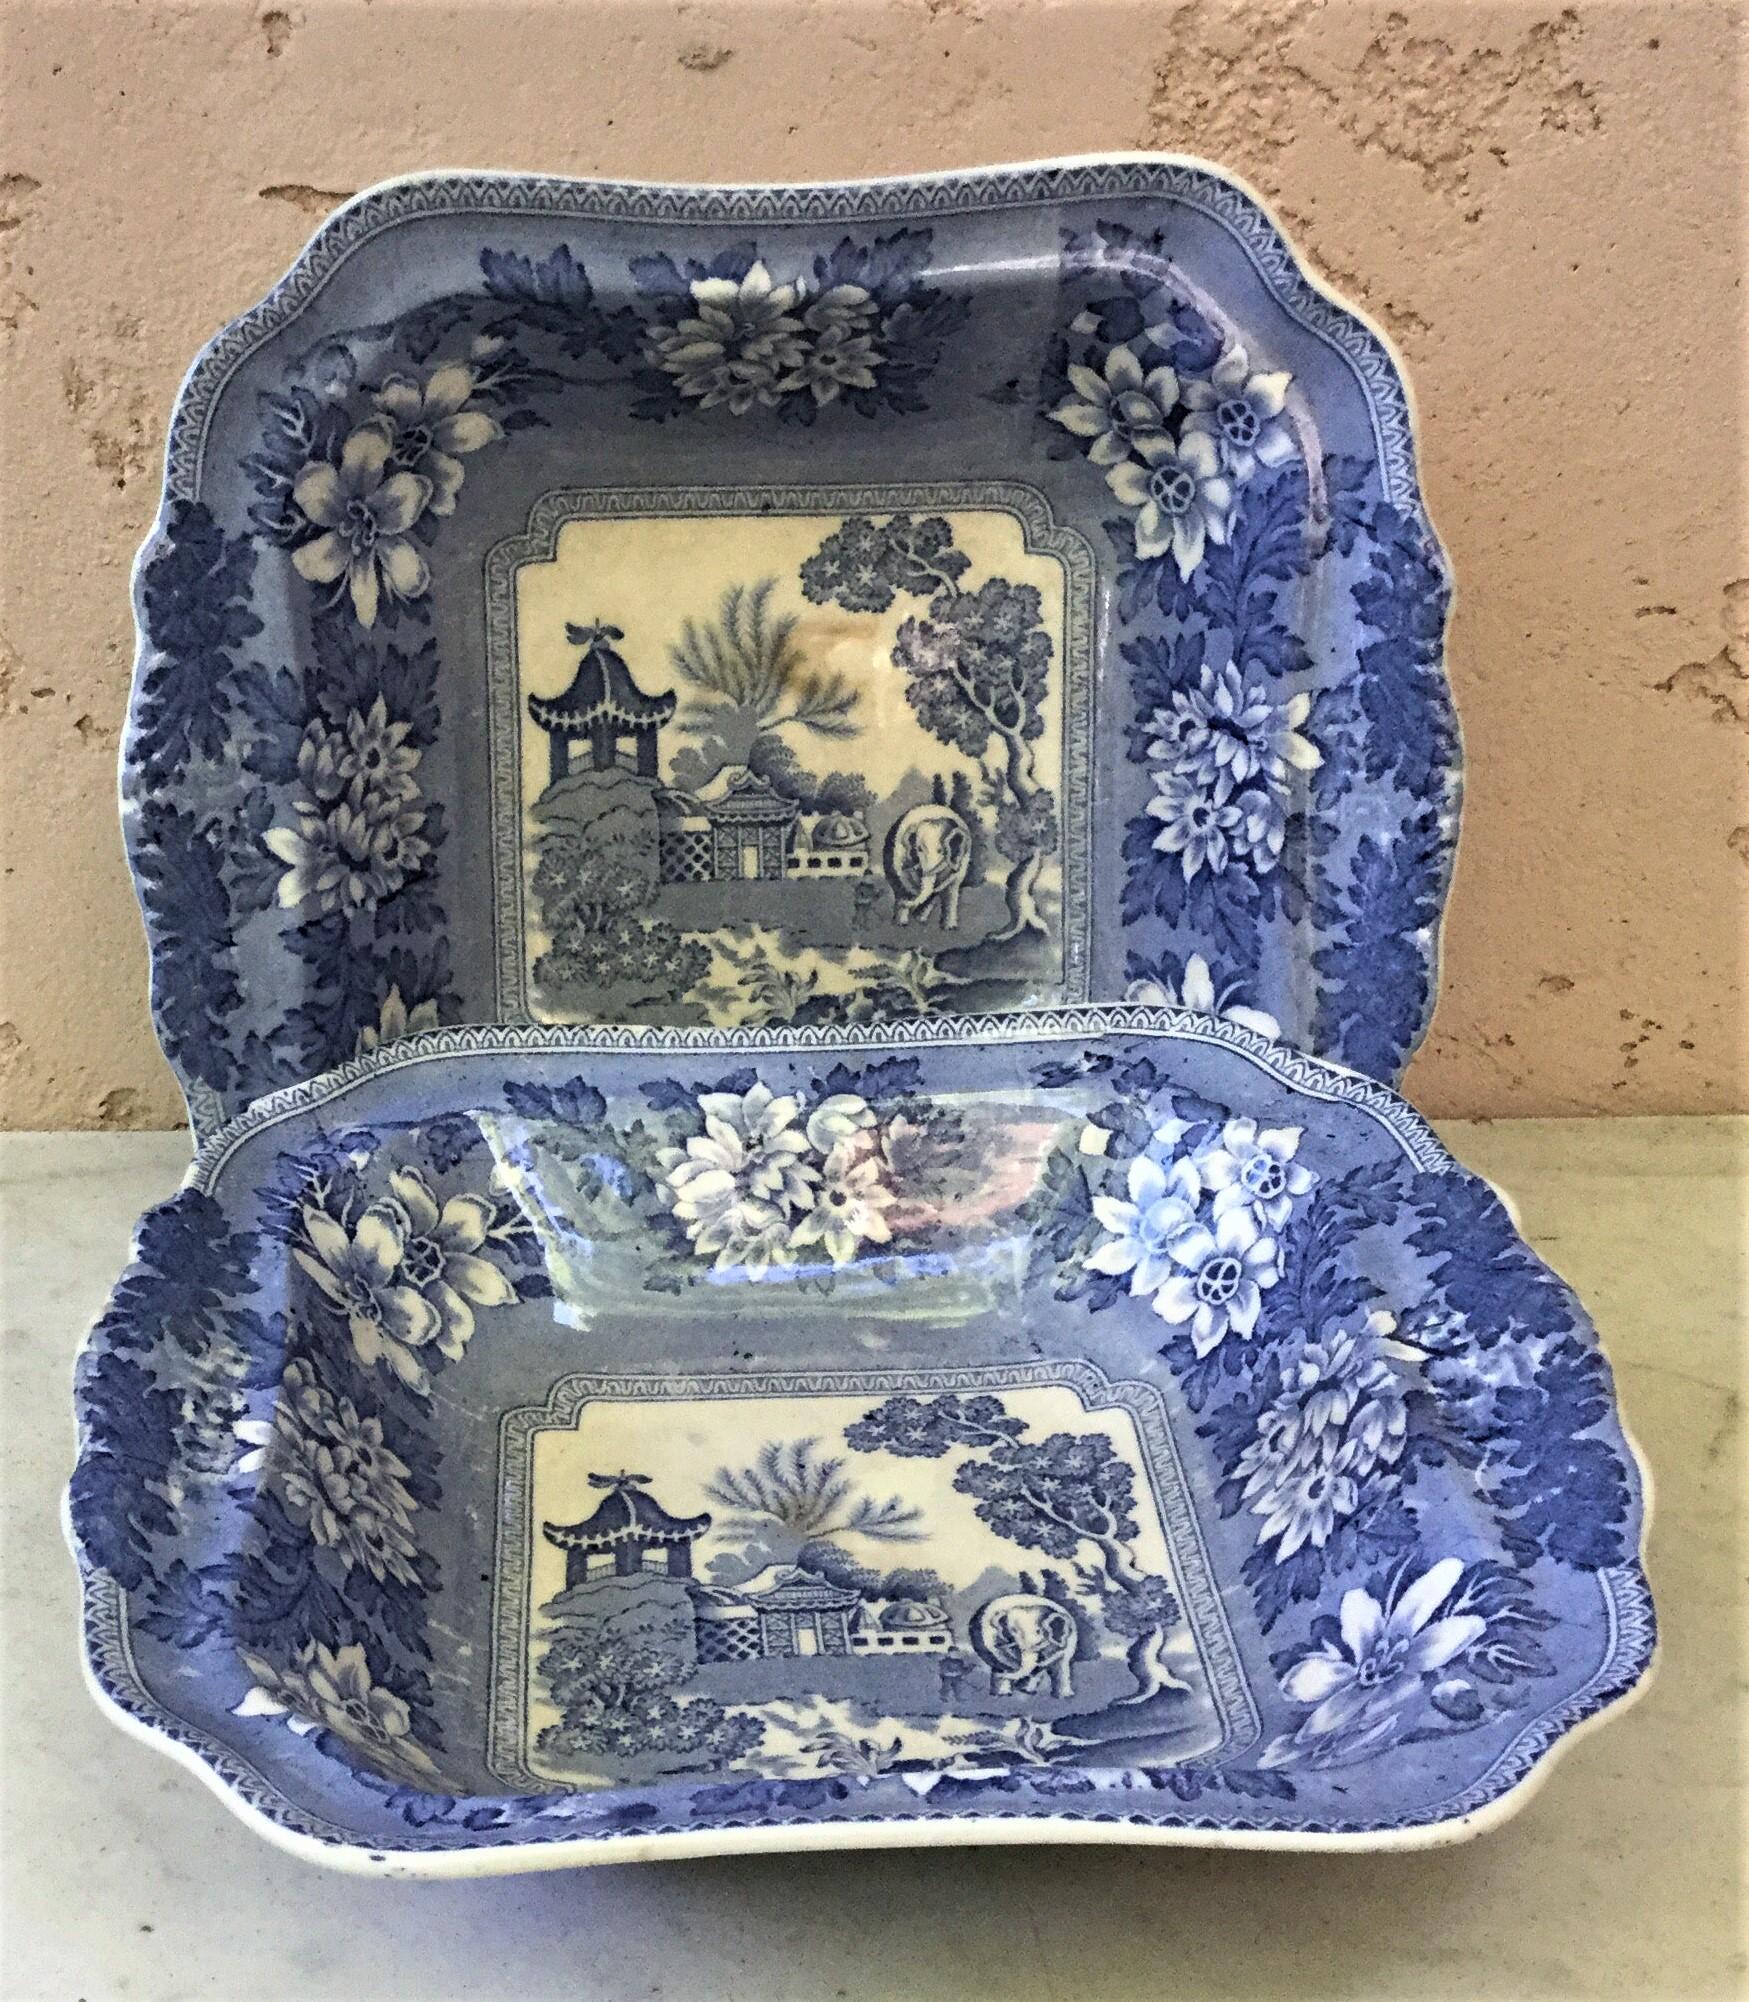 Rare set of three English blue and white platters signed Burslem.
1780 pattern Pagoda/elephant.
End of 19th century.